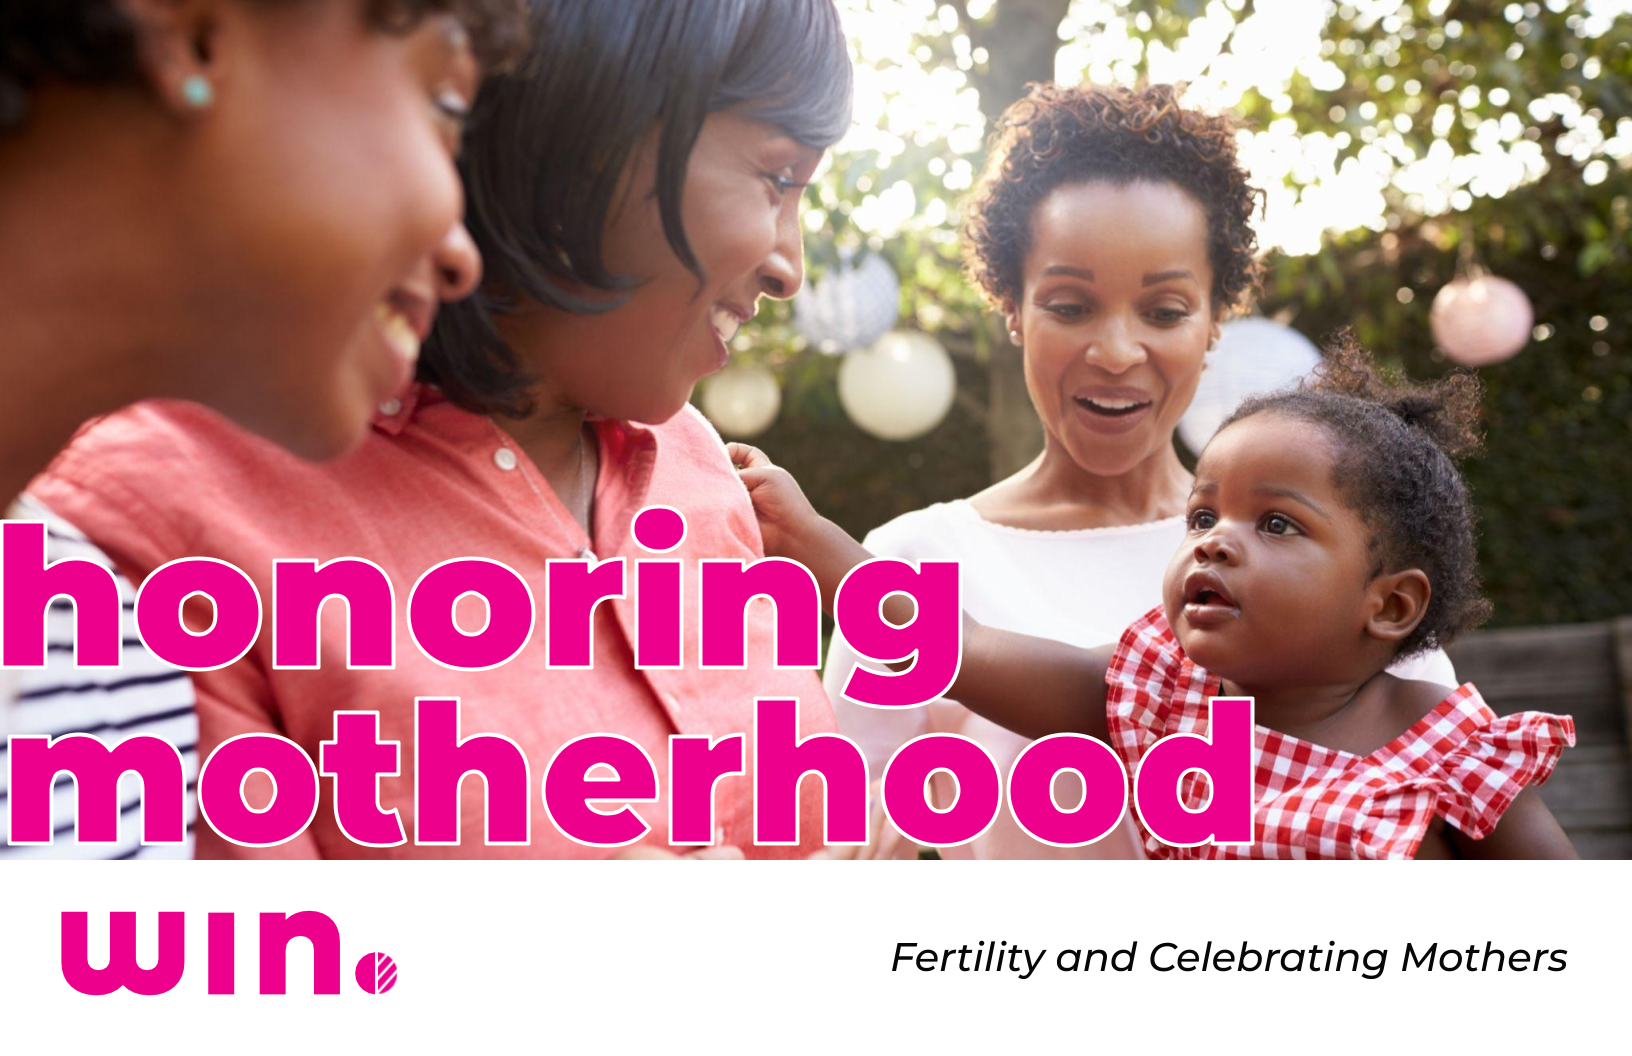 Image description Honoring Motherhood_ Fertility, Parenthood, and Celebrating Mothers